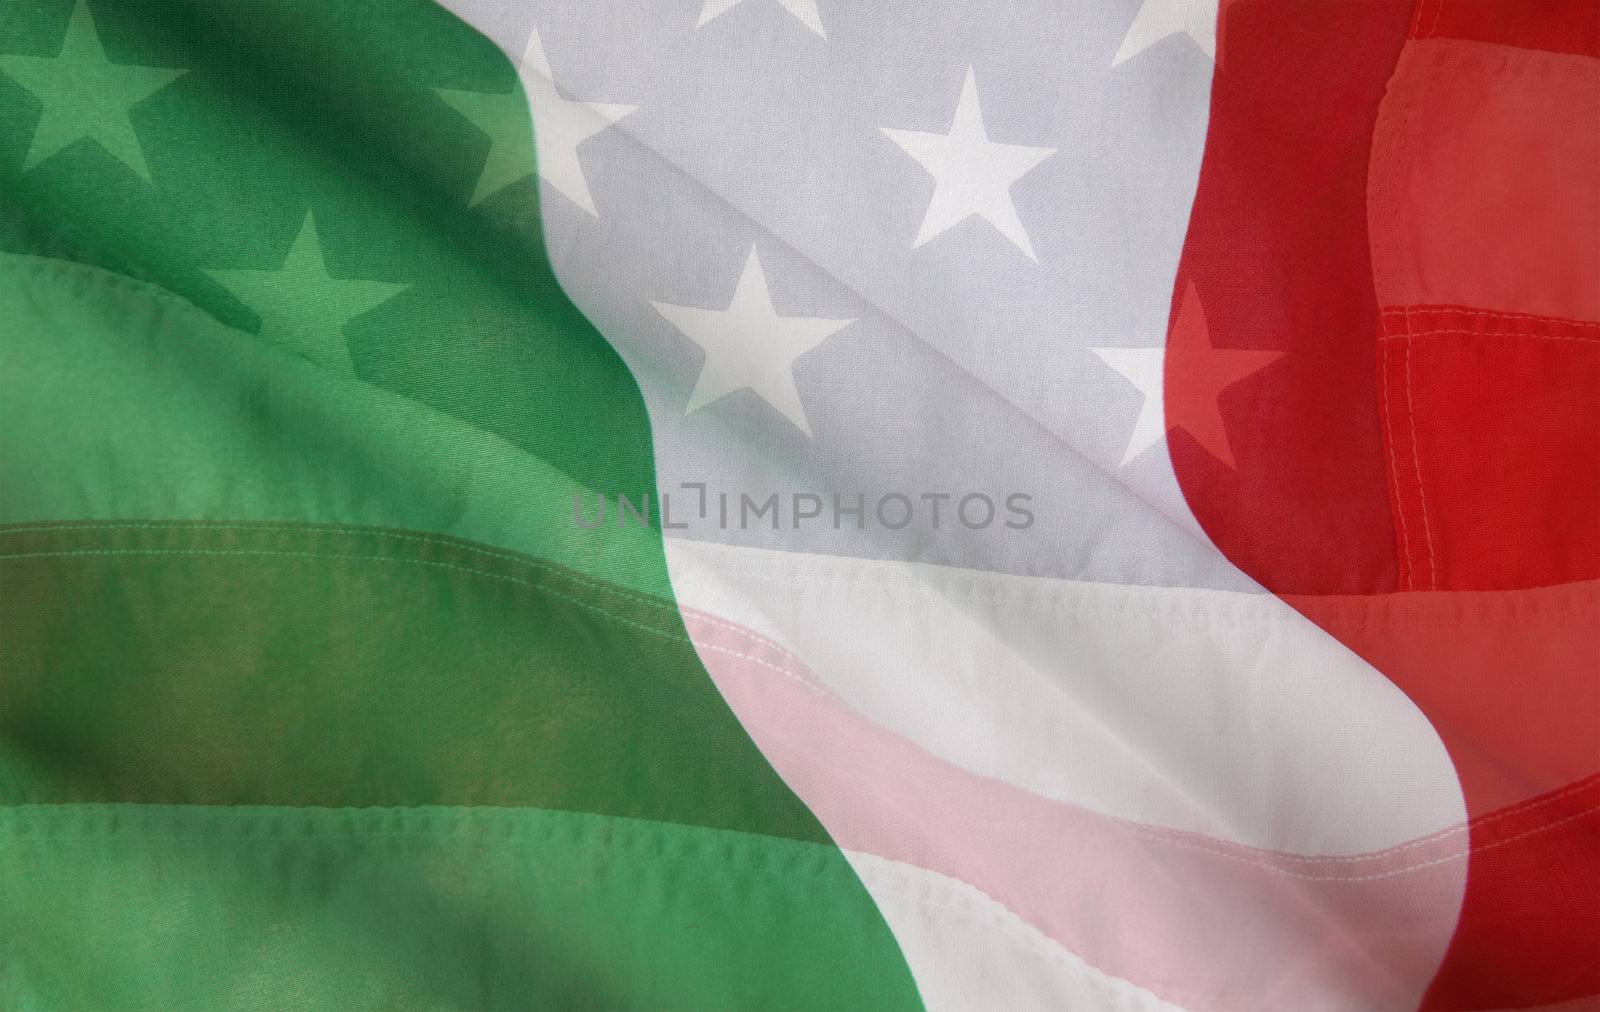 USA flag layered over an Italian flag